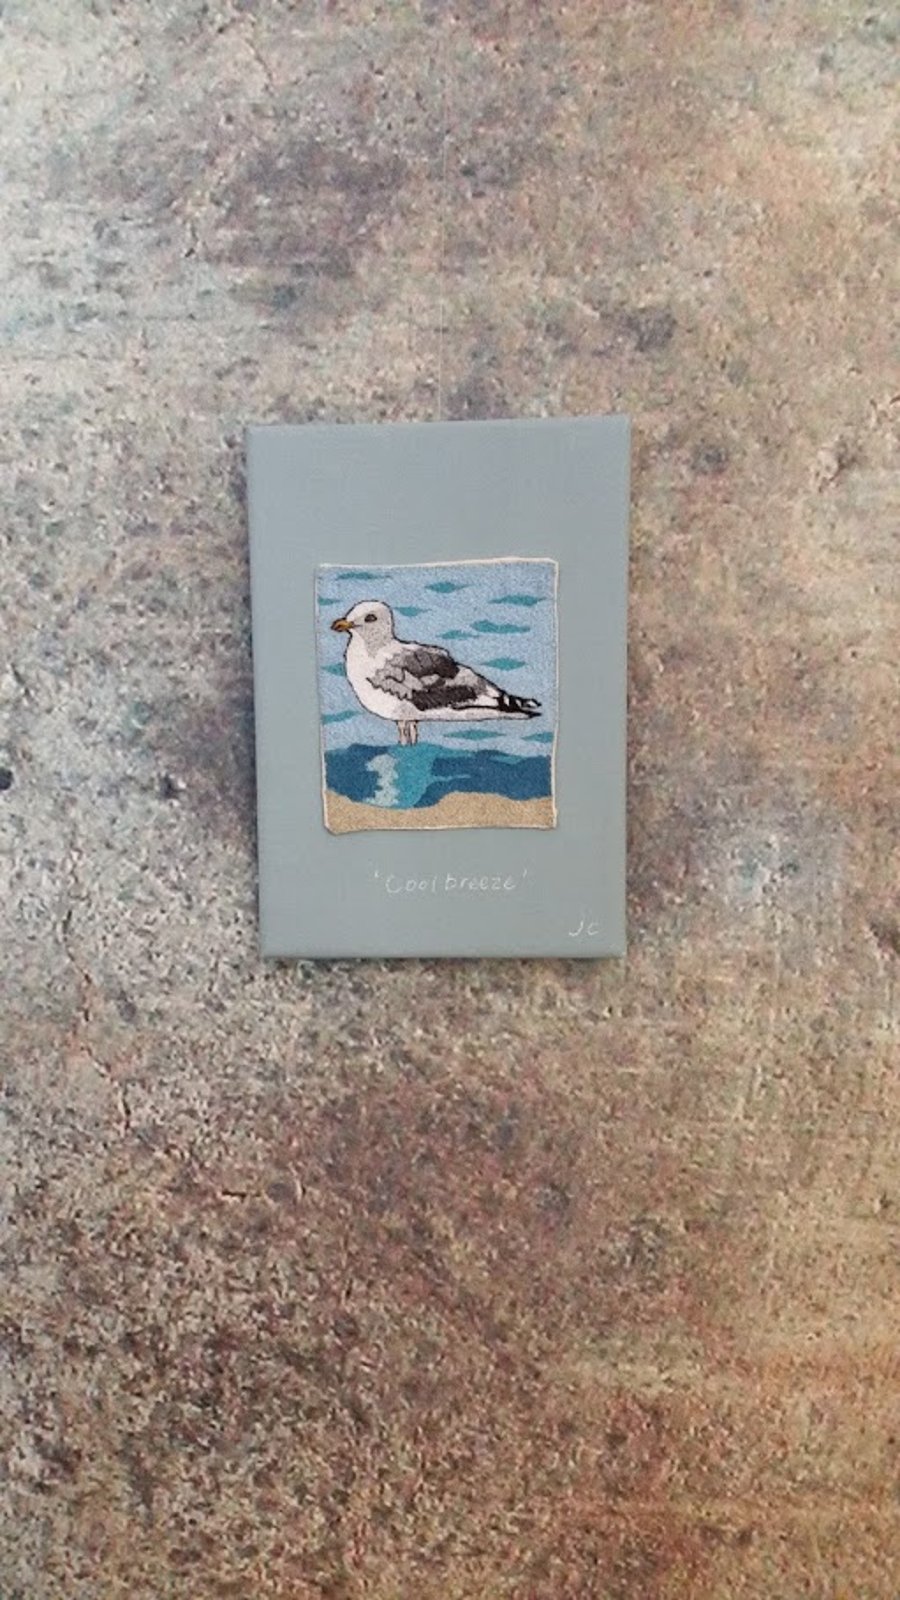 Little stitched seabird interior wallpiece - 'Cool breeze'